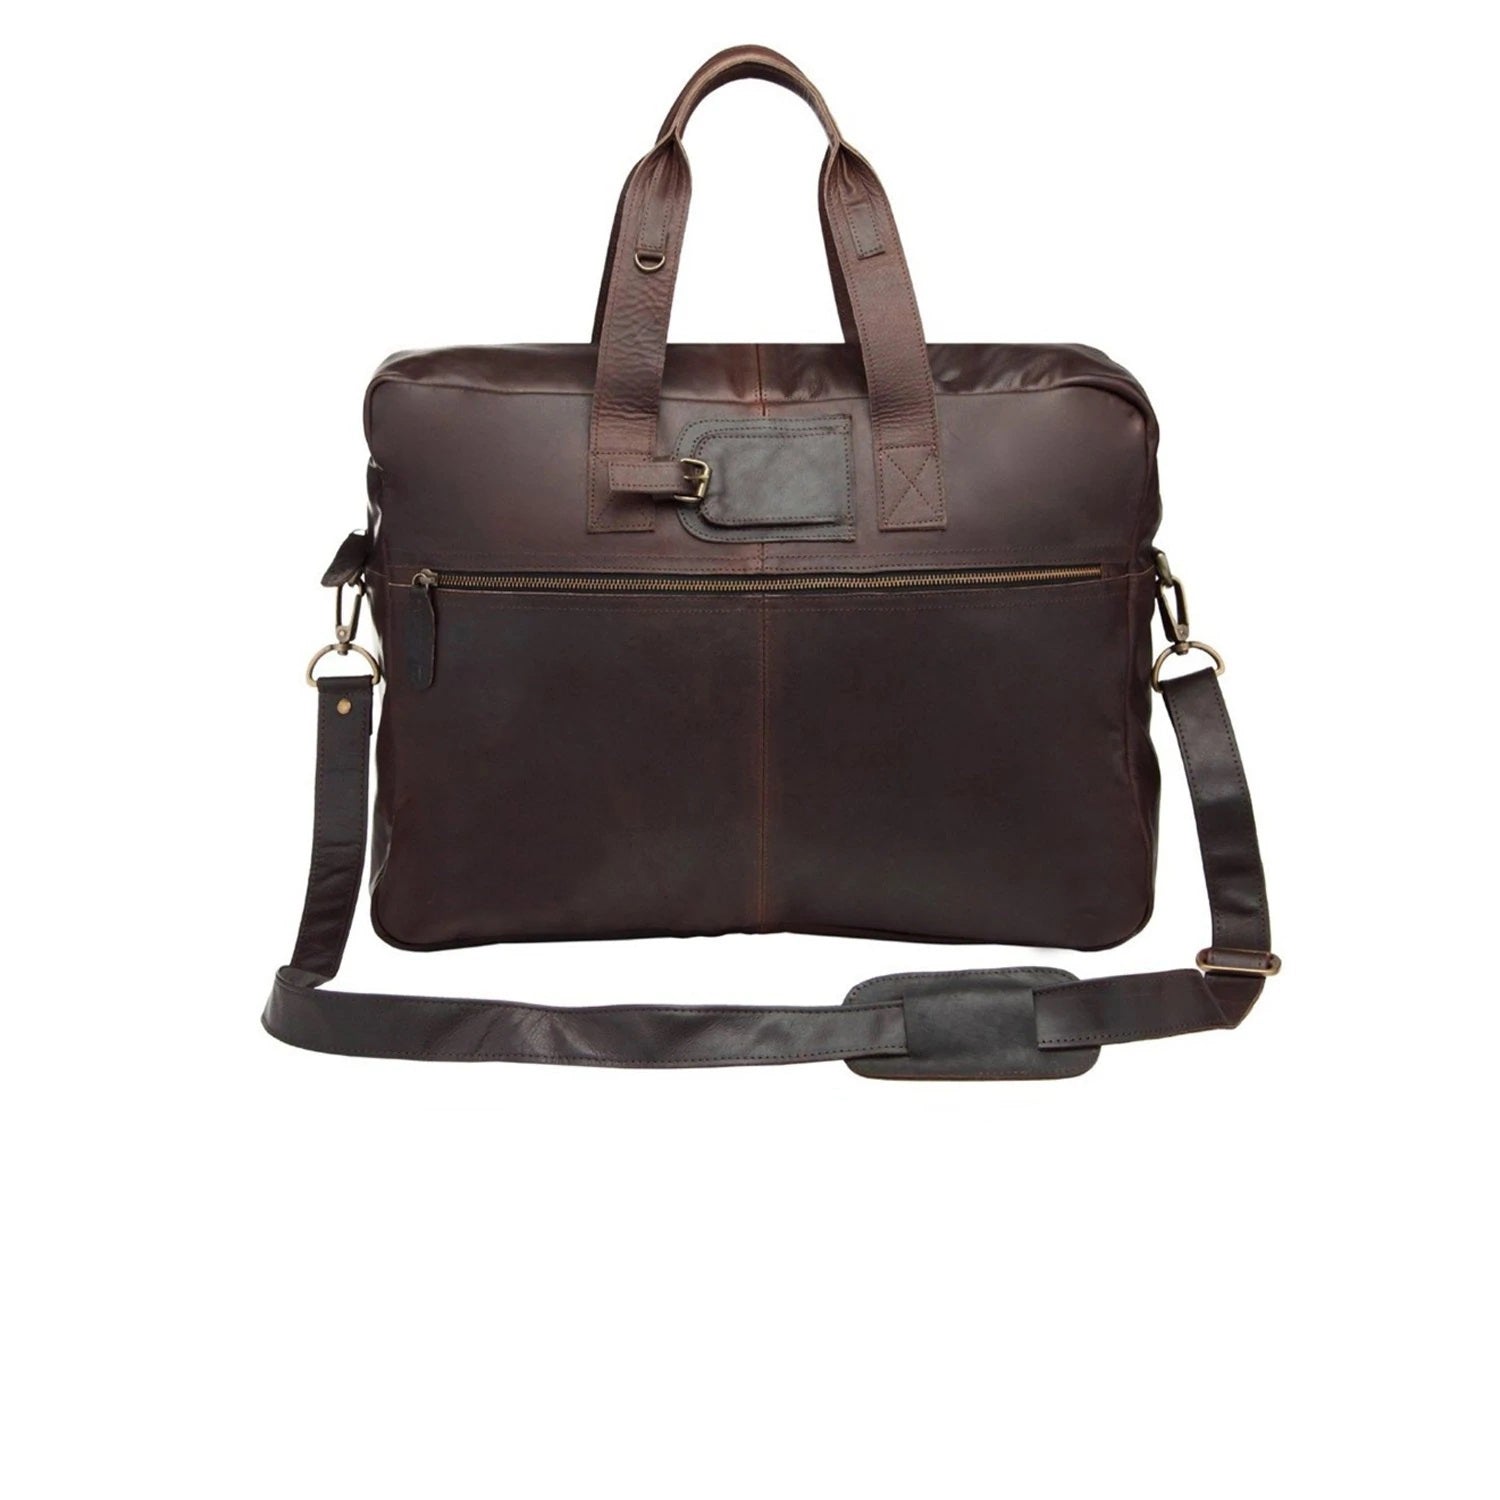 Mahograny Leather Bag